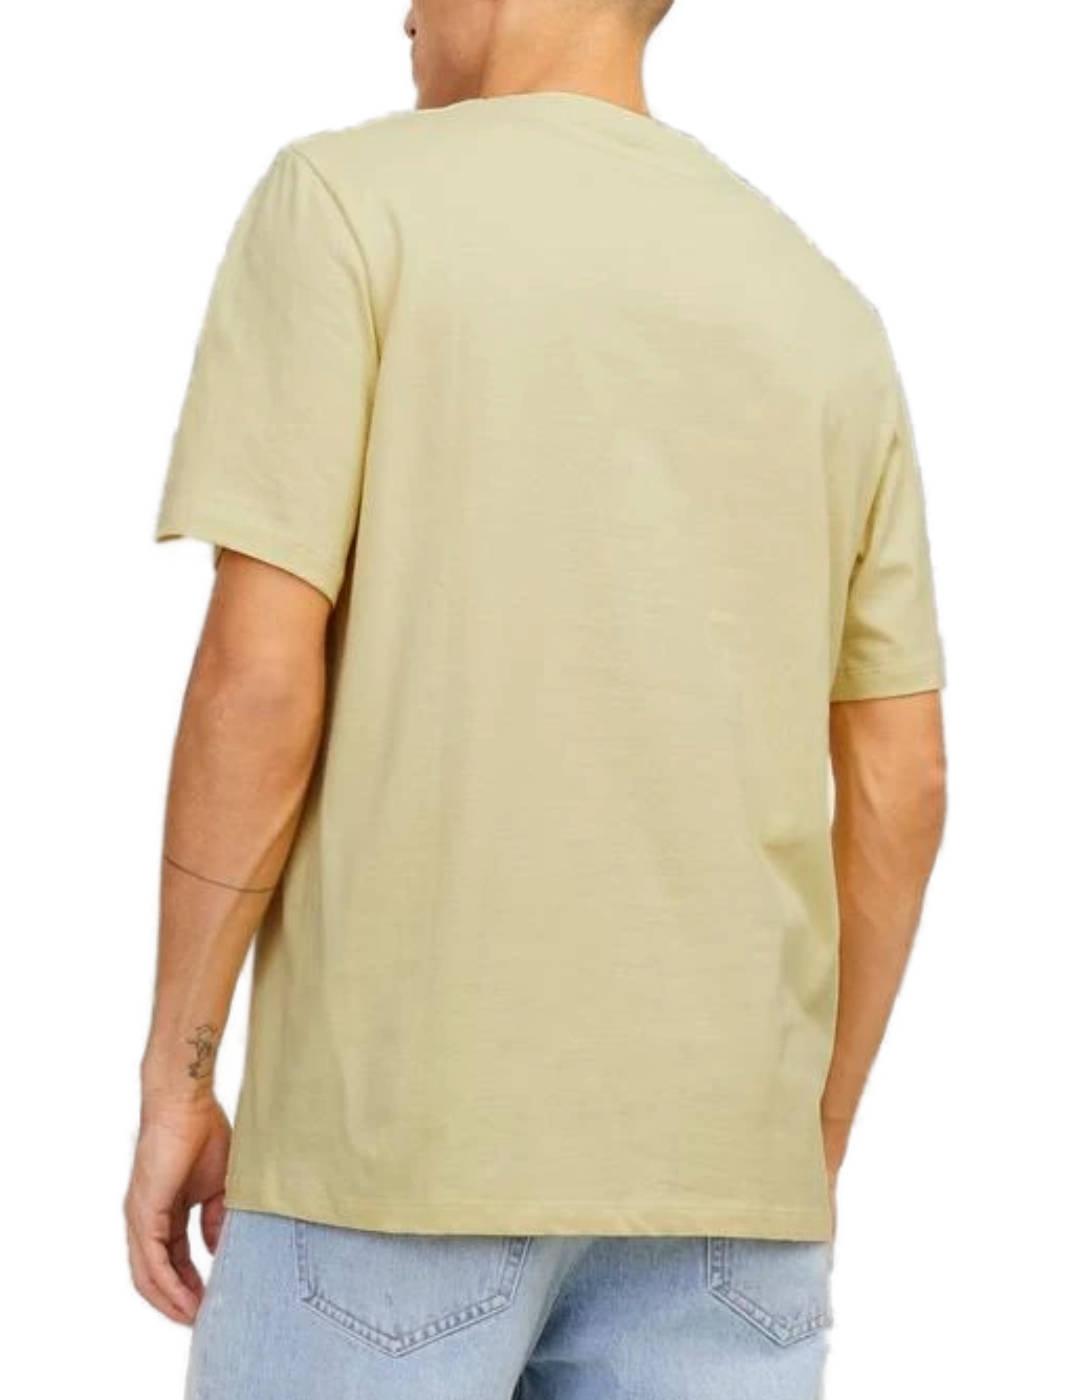 Camiseta Jack&Jones Summer amarillo manga corta para hombre